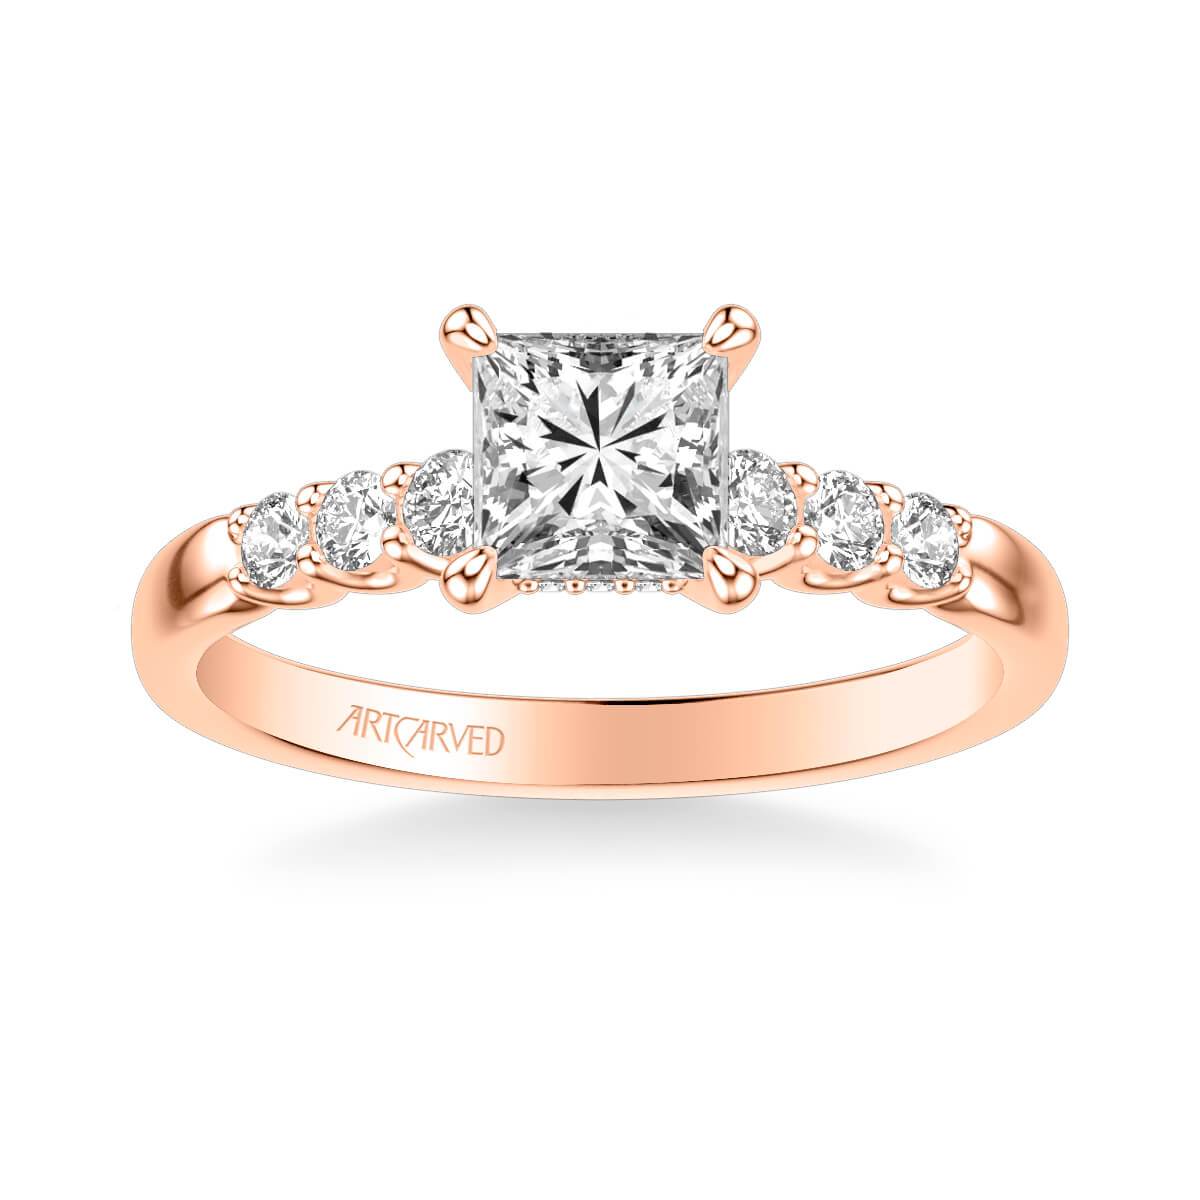 Erica Classic Side Stone Diamond Engagement Ring